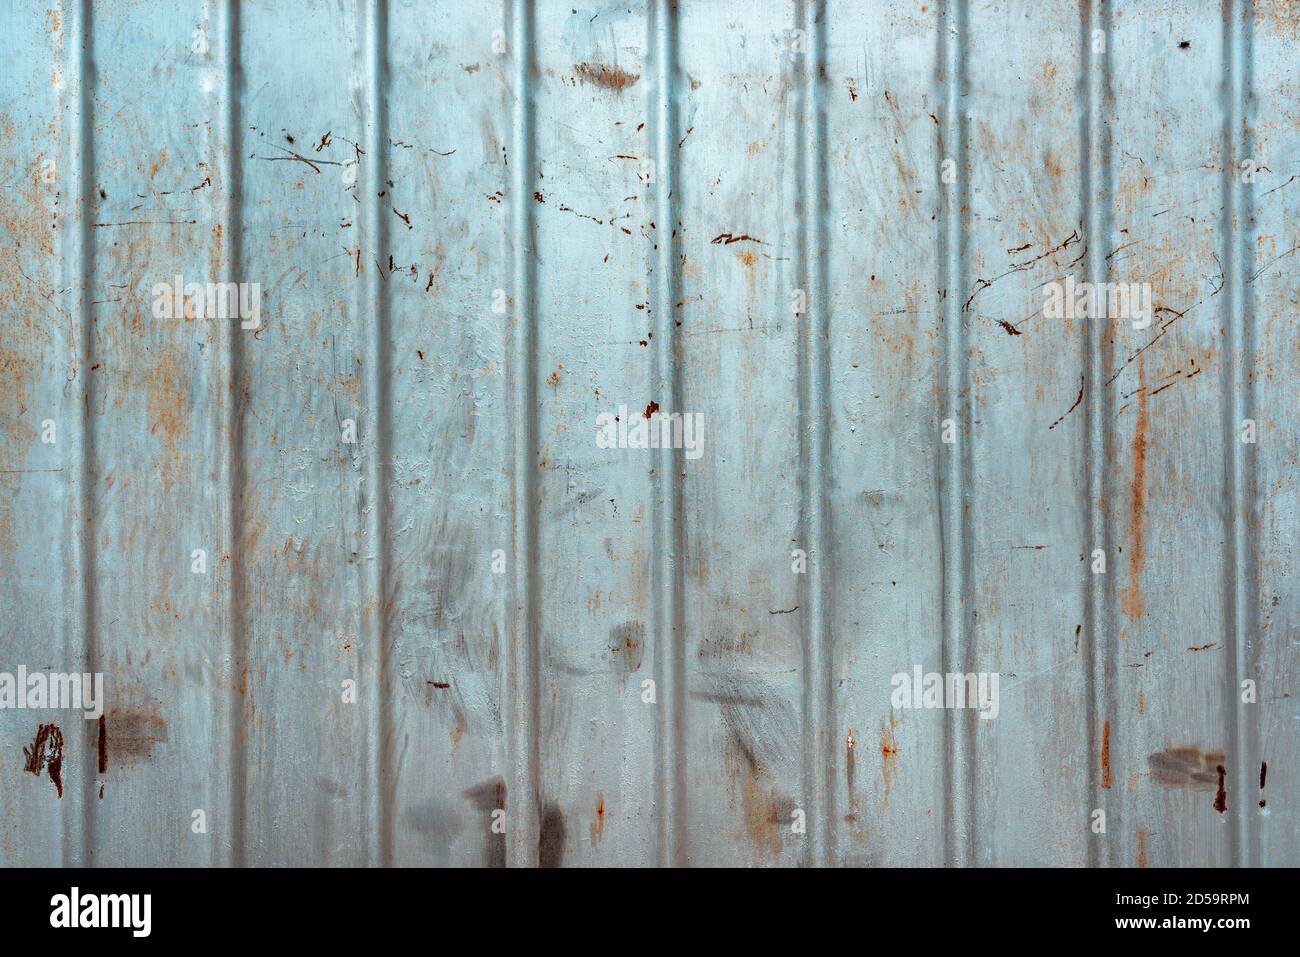 Hintergrund aus Wellblech, verwitterte Metalloberfläche Stockfoto